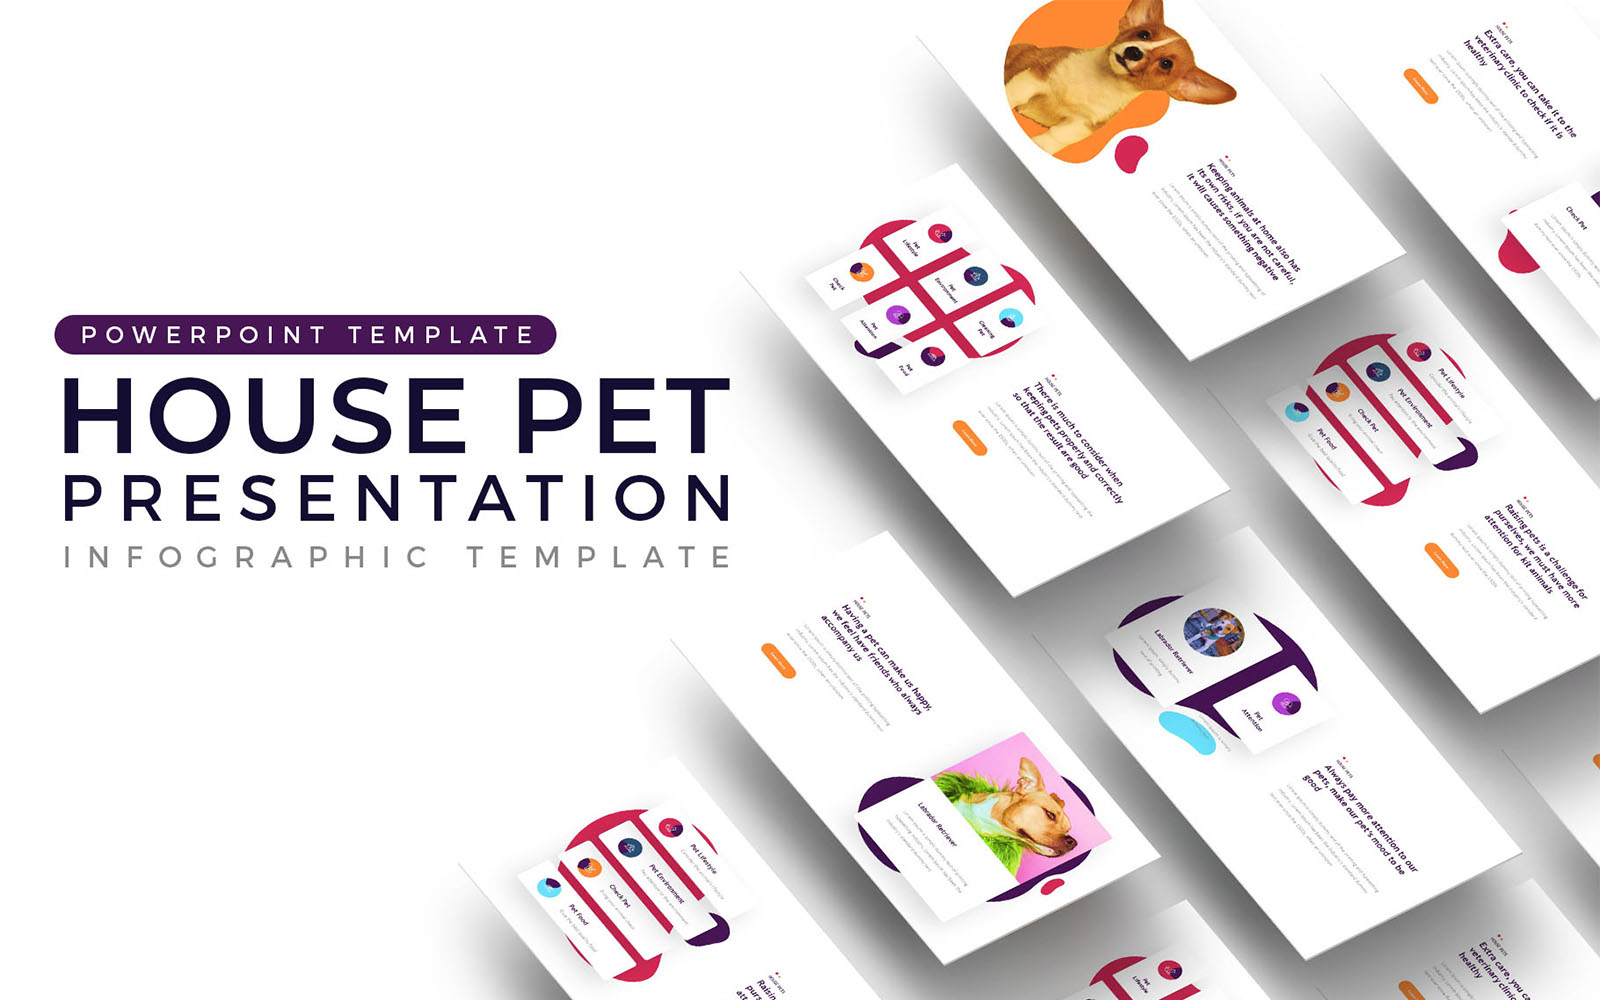 House Pet Presentation PowerPoint template